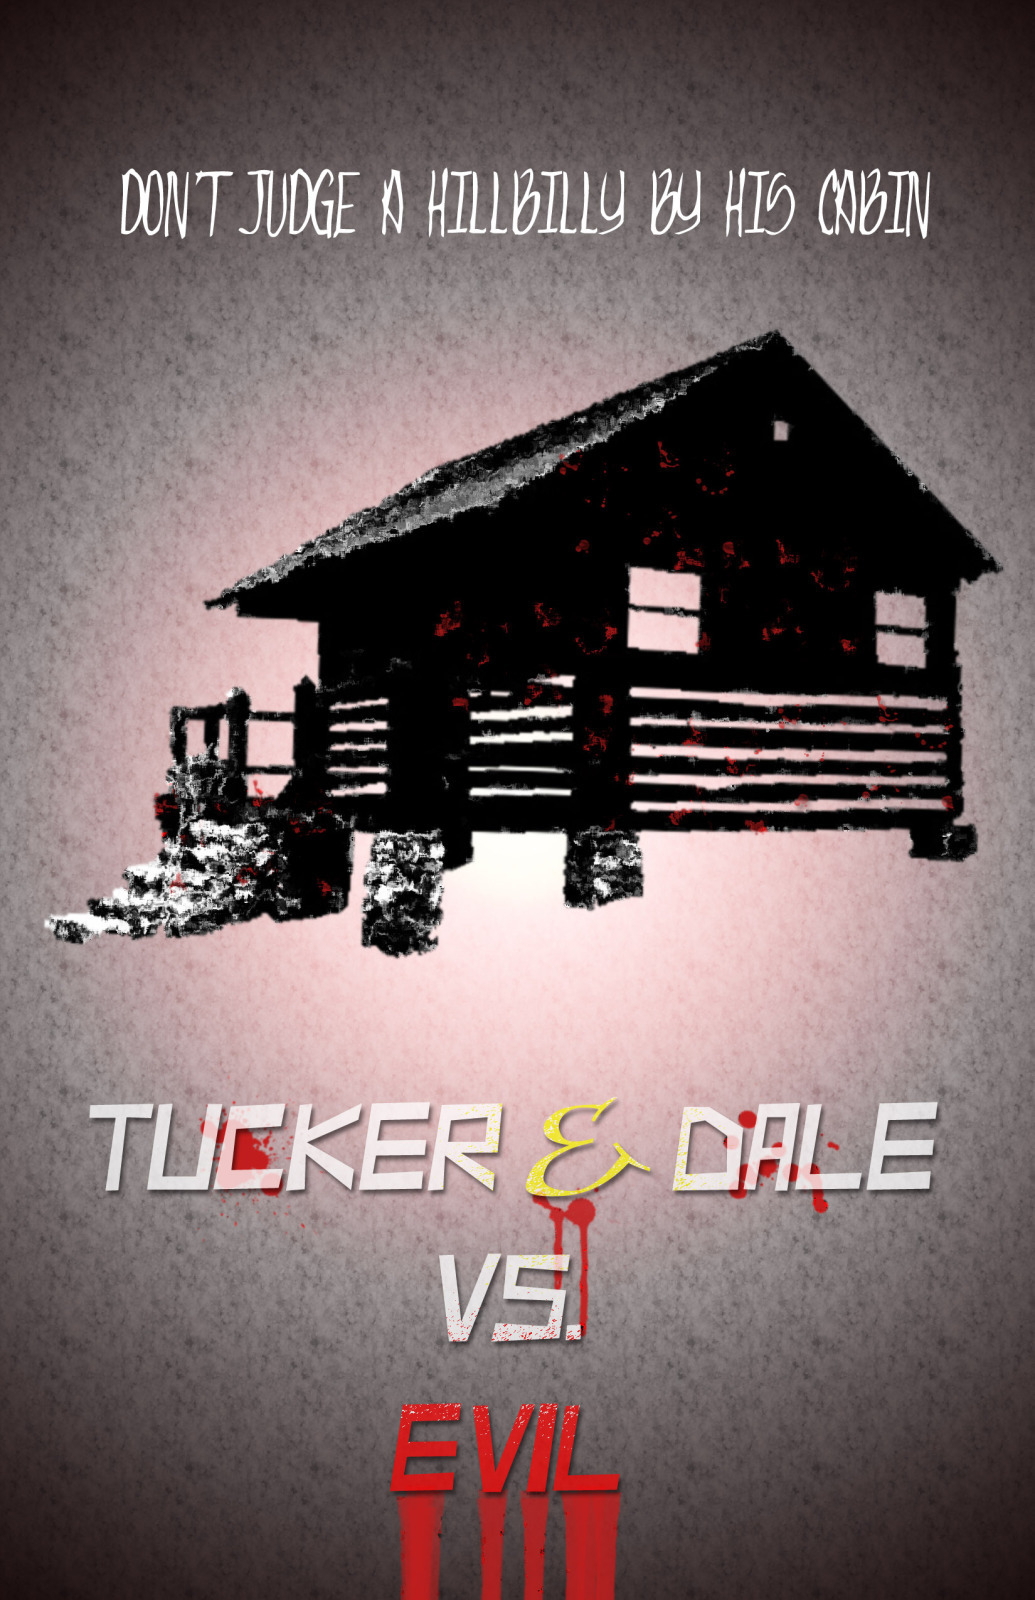  [20/365 Films] - Tucker and Dale vs. Evil (2010) “Oh hidy ho officer, we’ve